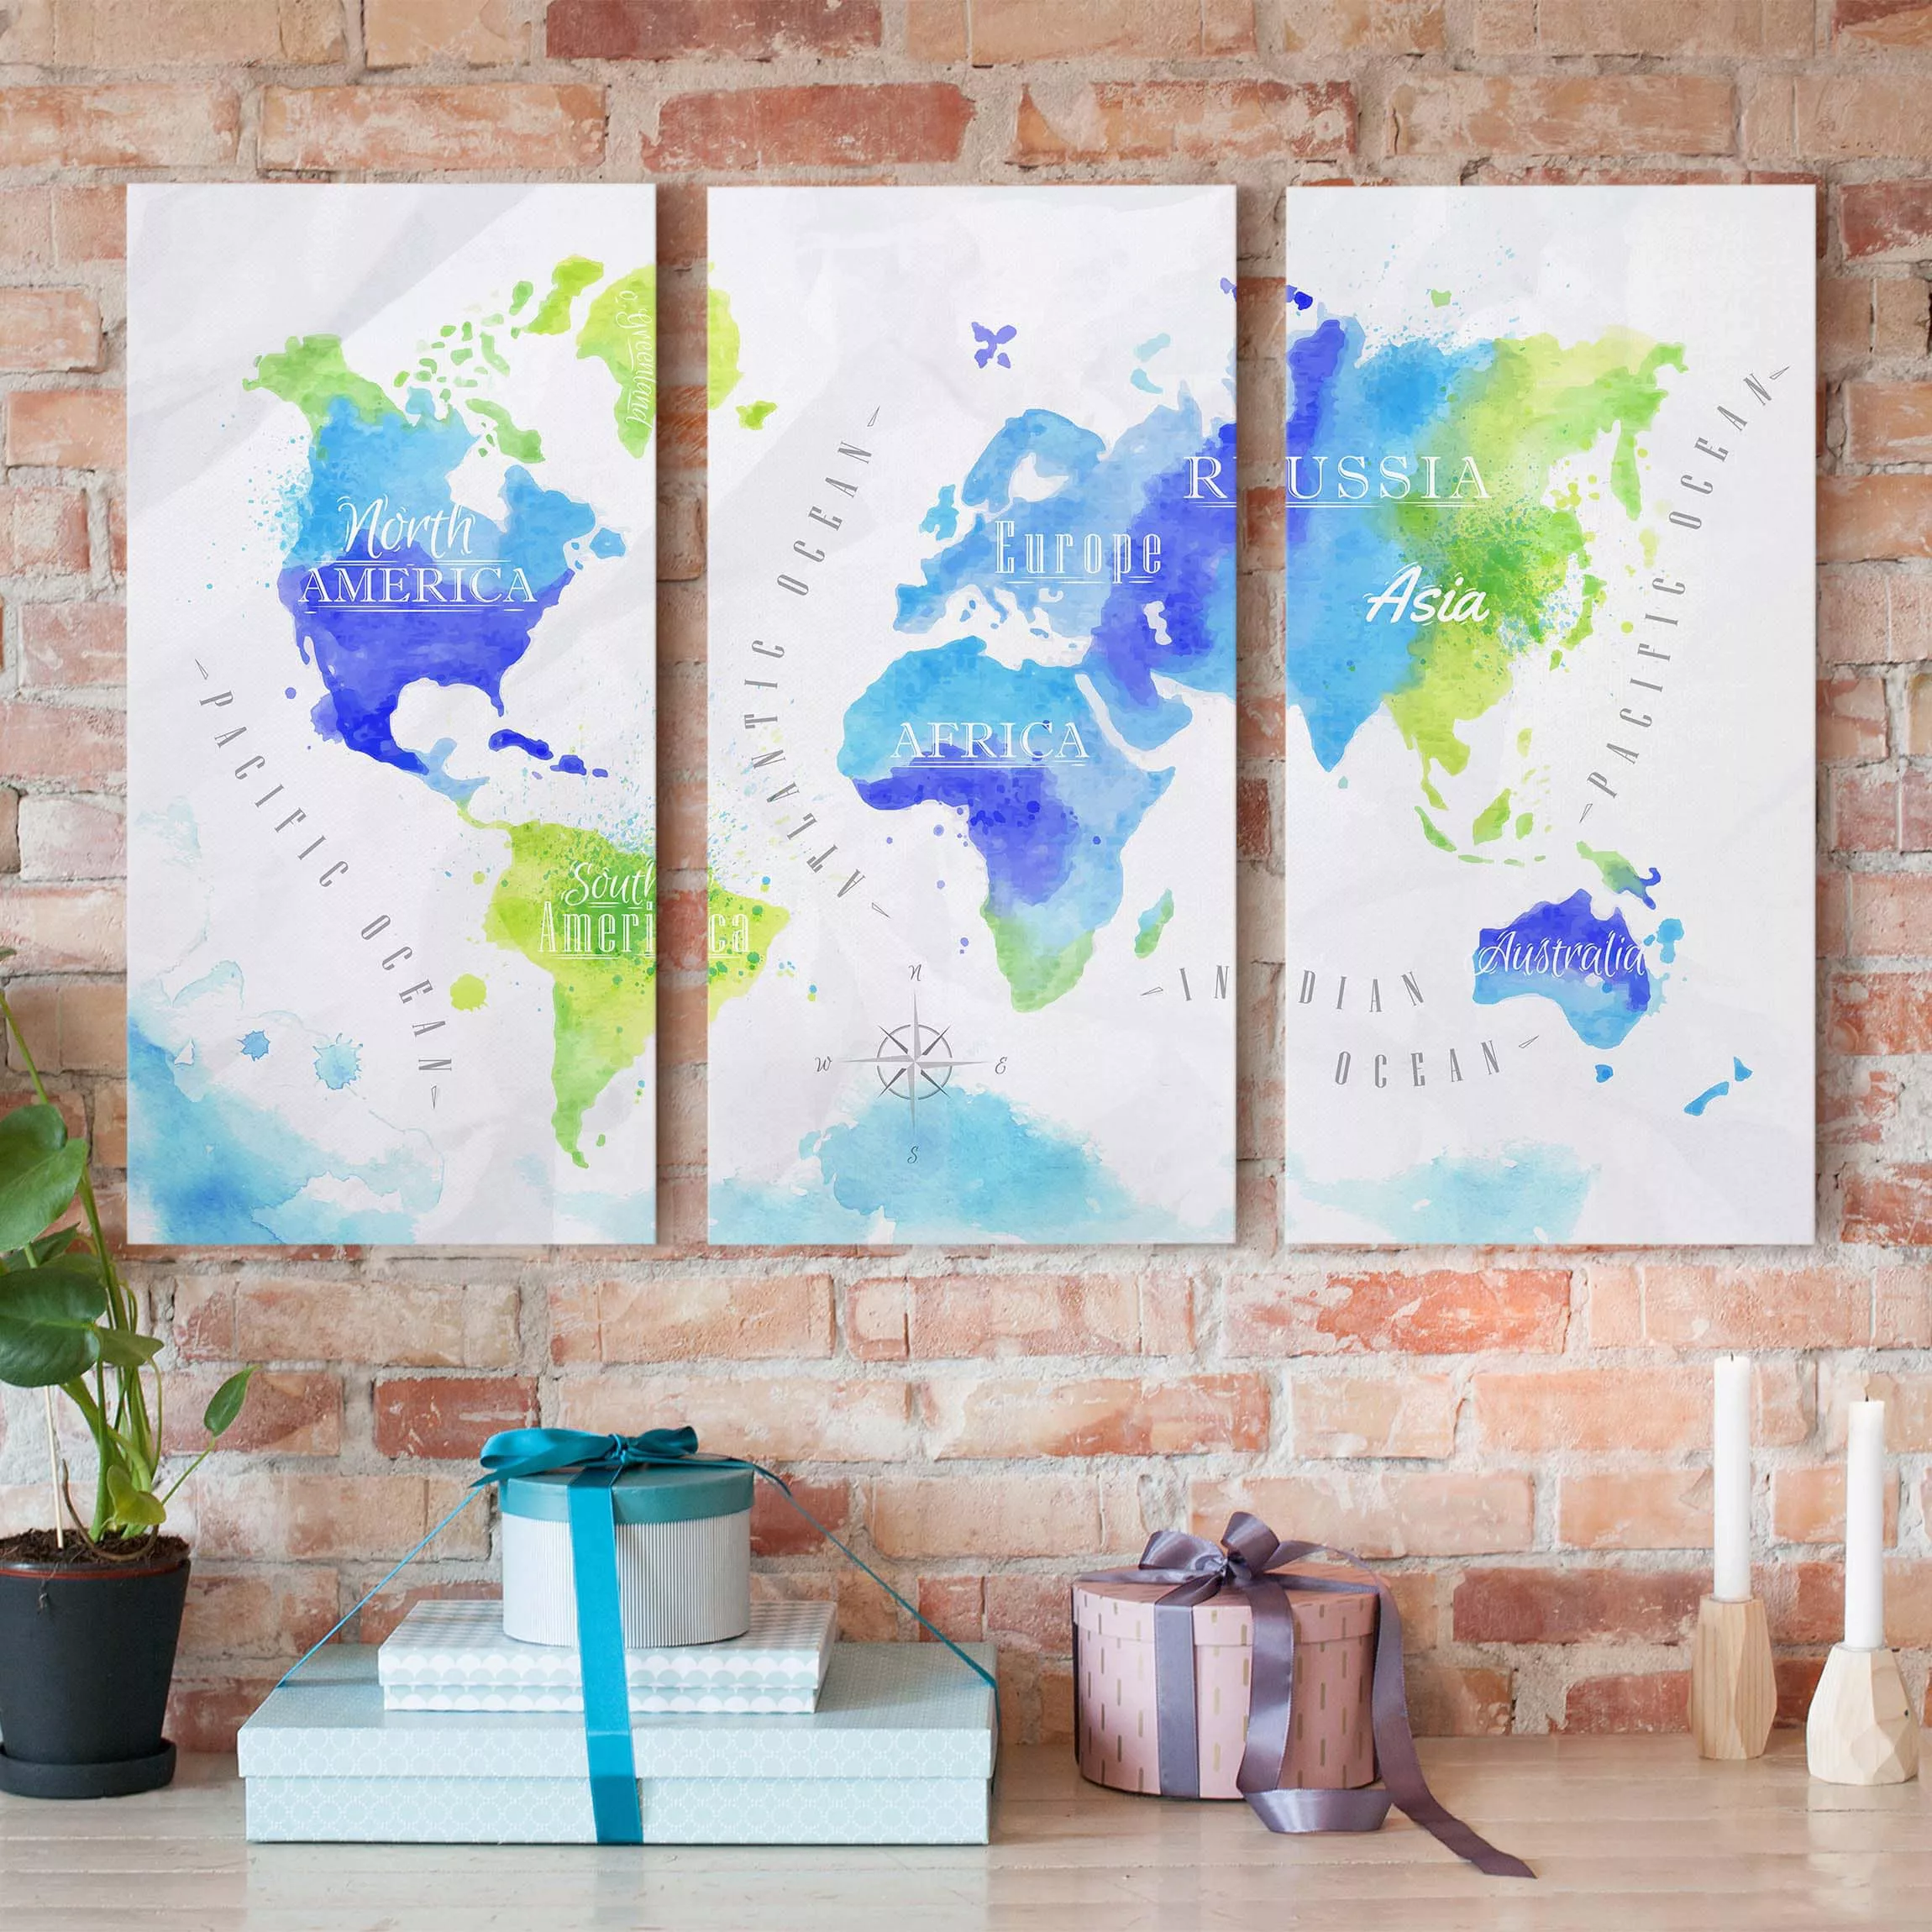 3-teiliges Leinwandbild Aquarell - Querformat Weltkarte Aquarell blau grün günstig online kaufen